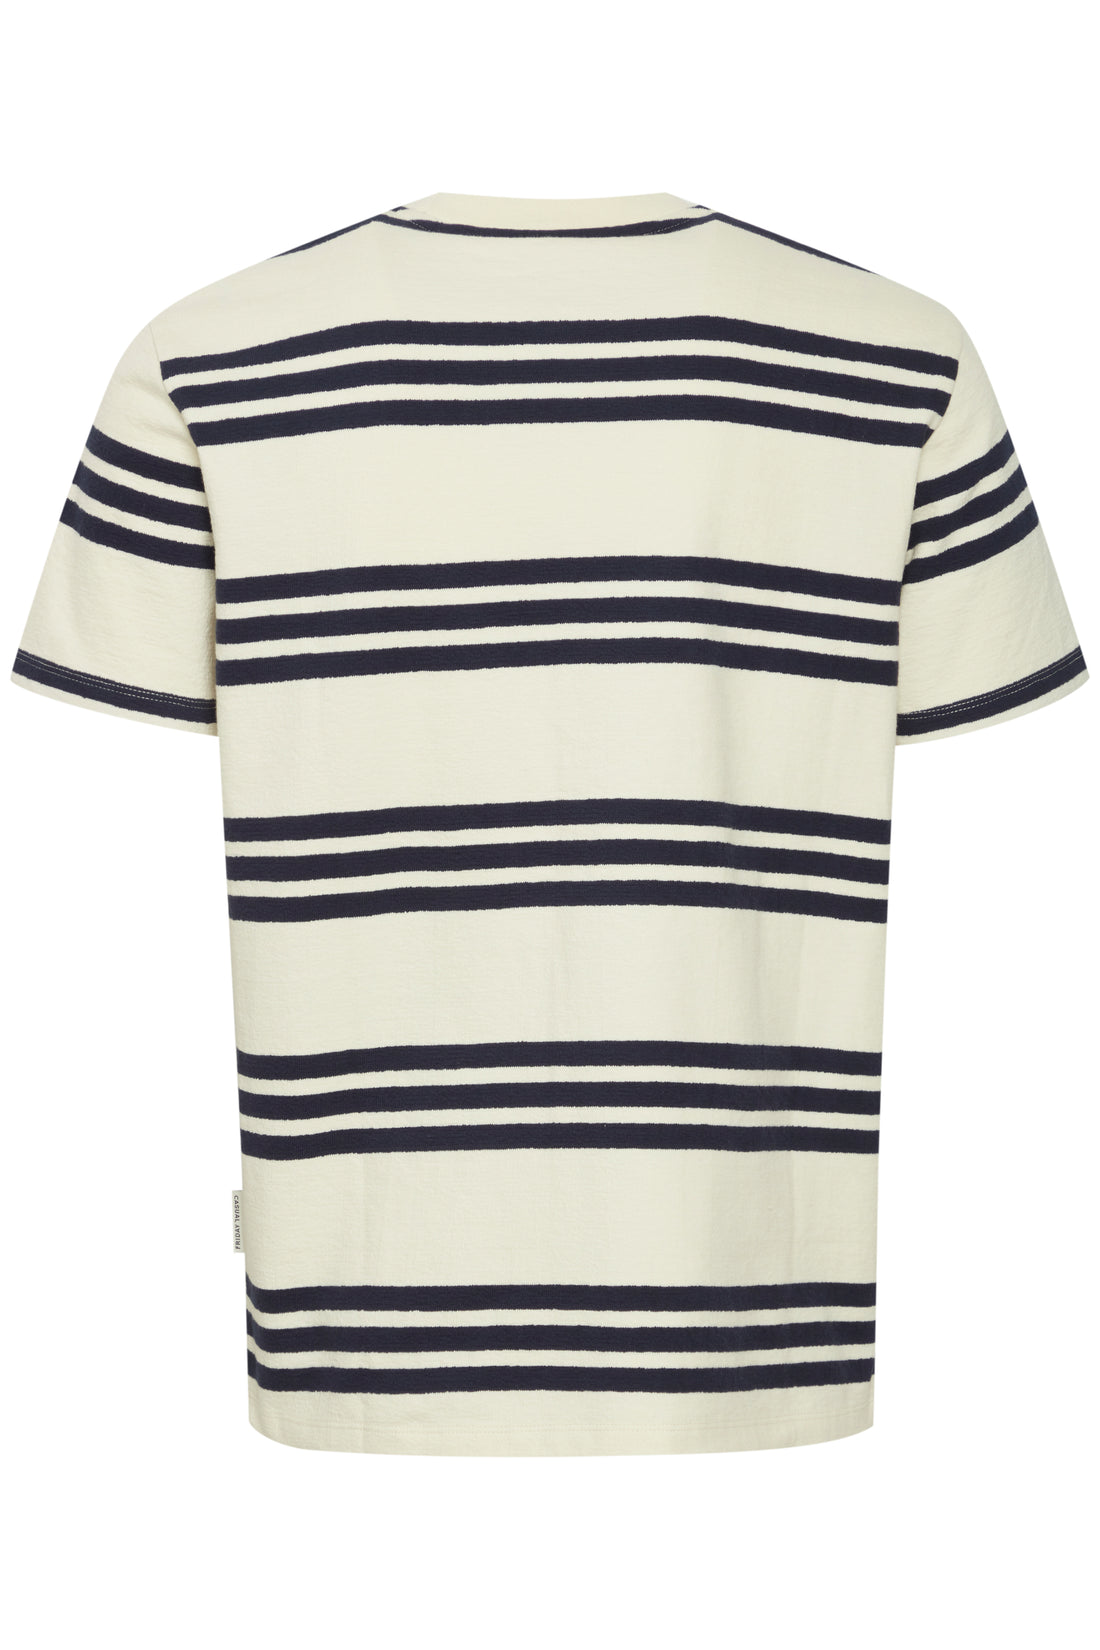 T-Shirt Structured Striped Crème/Bleu Marine Casual Friday